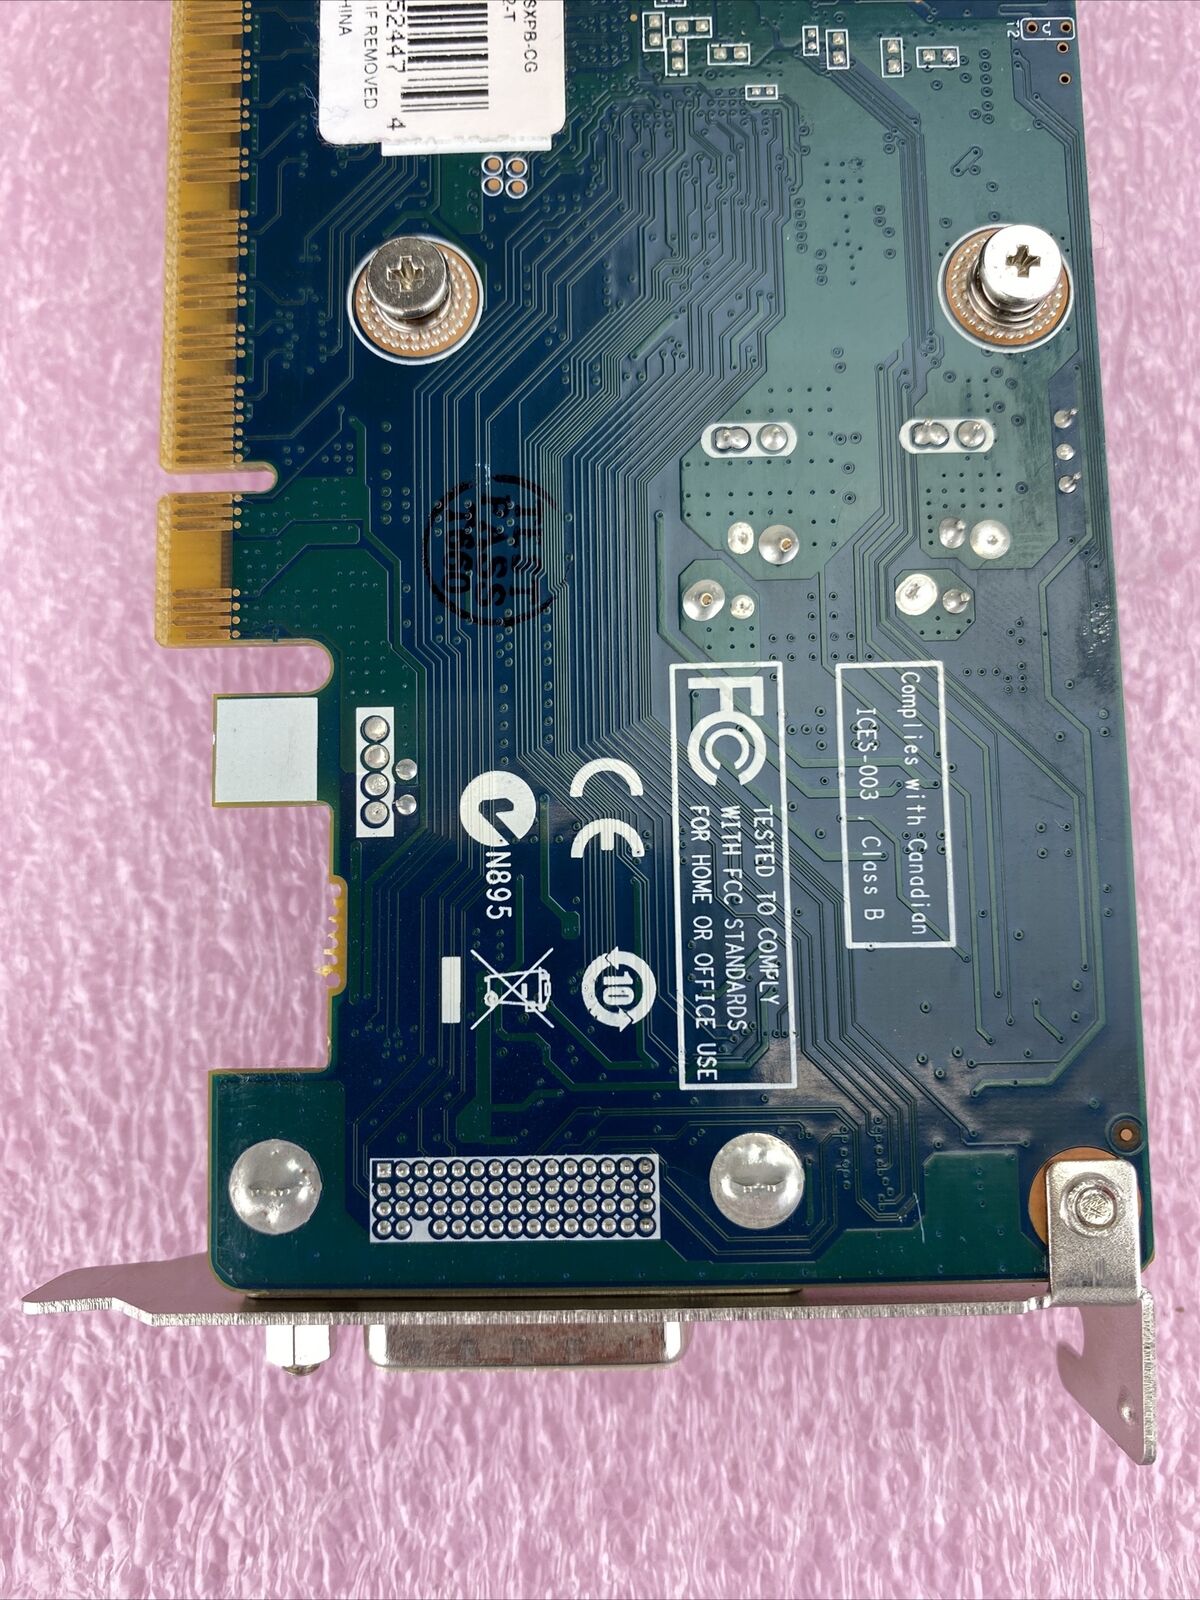 PNY GeForce 8400GS 1GB DDR3 DMS-59 PCI-E 2.0 Video Card w/ Molex DSM-59 to VGA